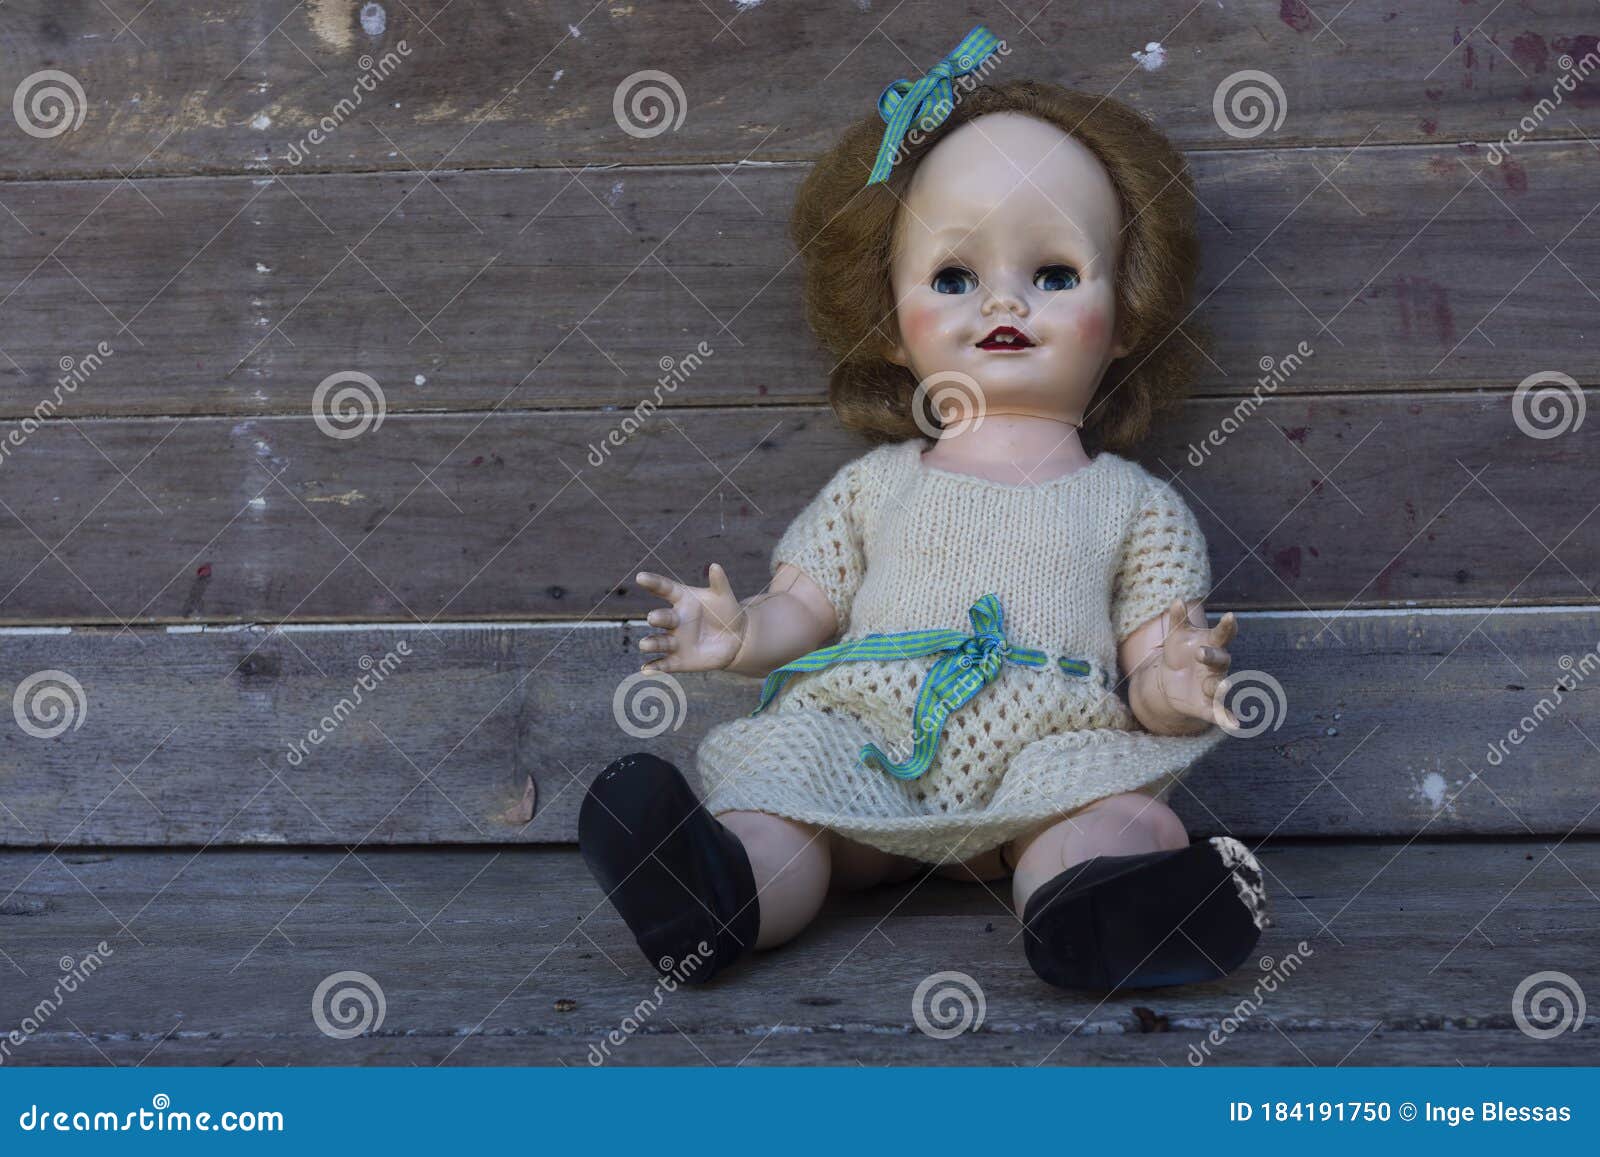 Creepy Doll Decor for Halloween - Morena's Corner